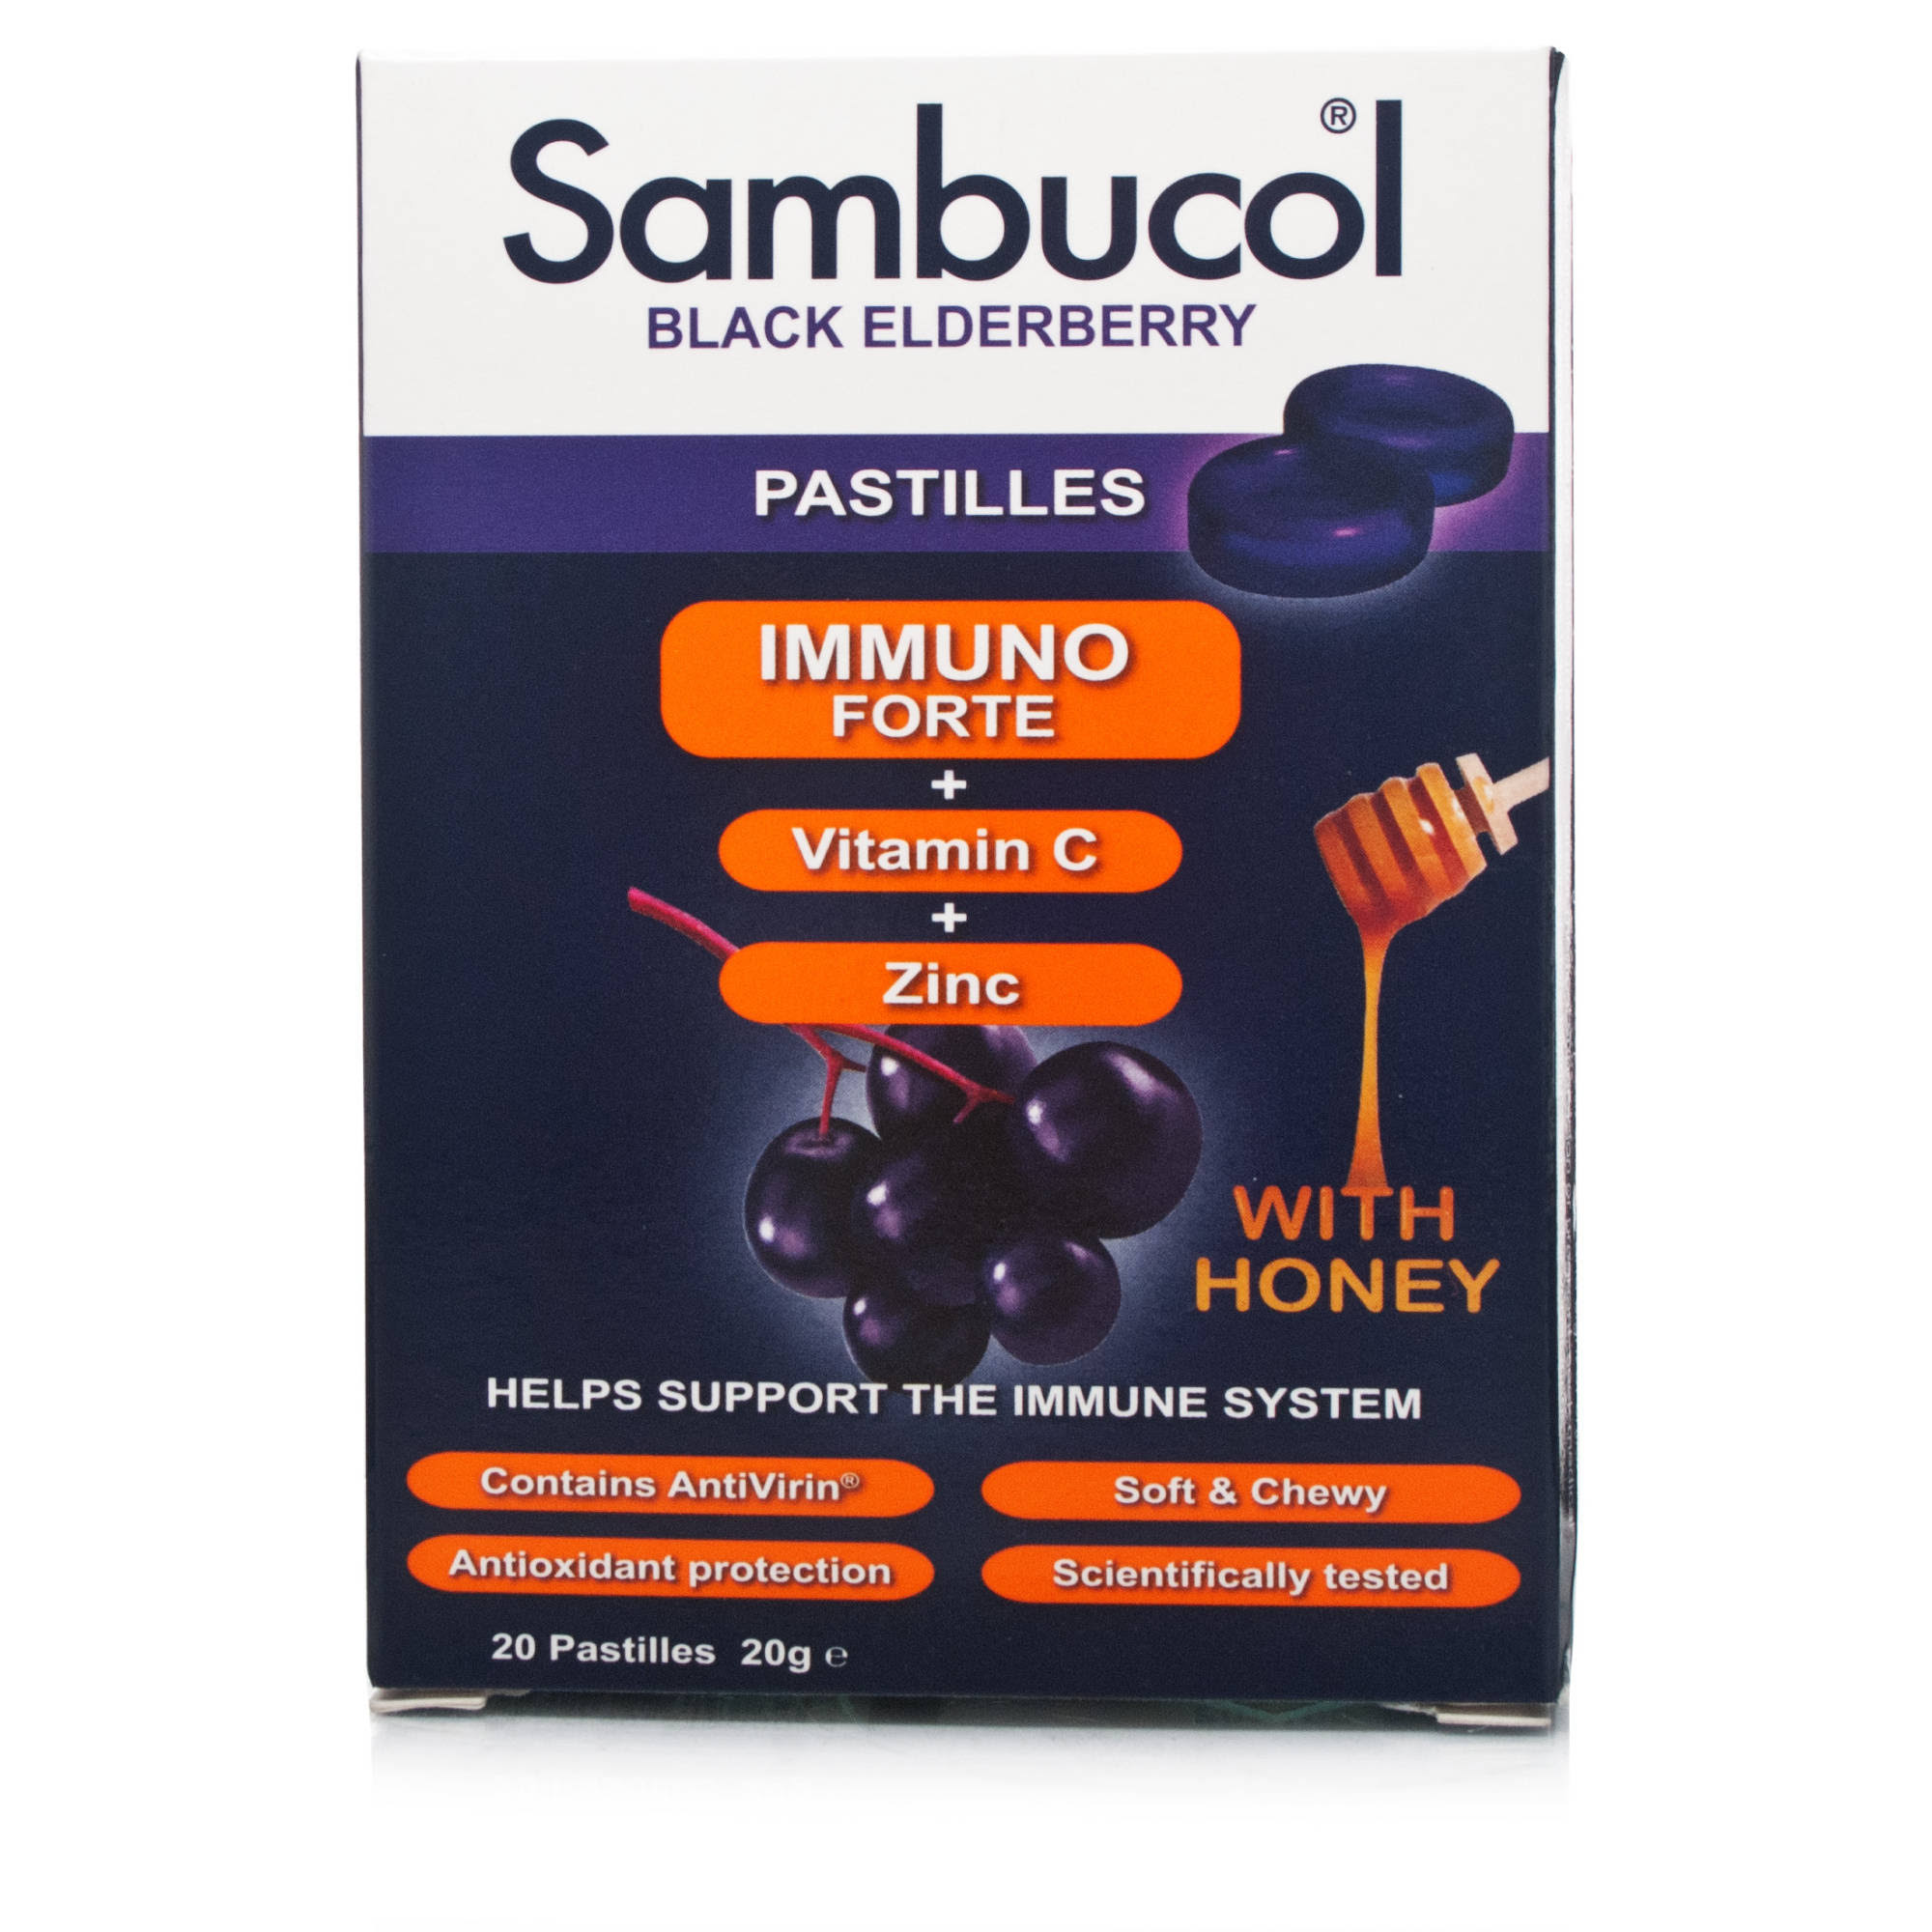 Sambucol Immuno Forte Pastilles - Black Elderberry/Honey, 40g, 20ct